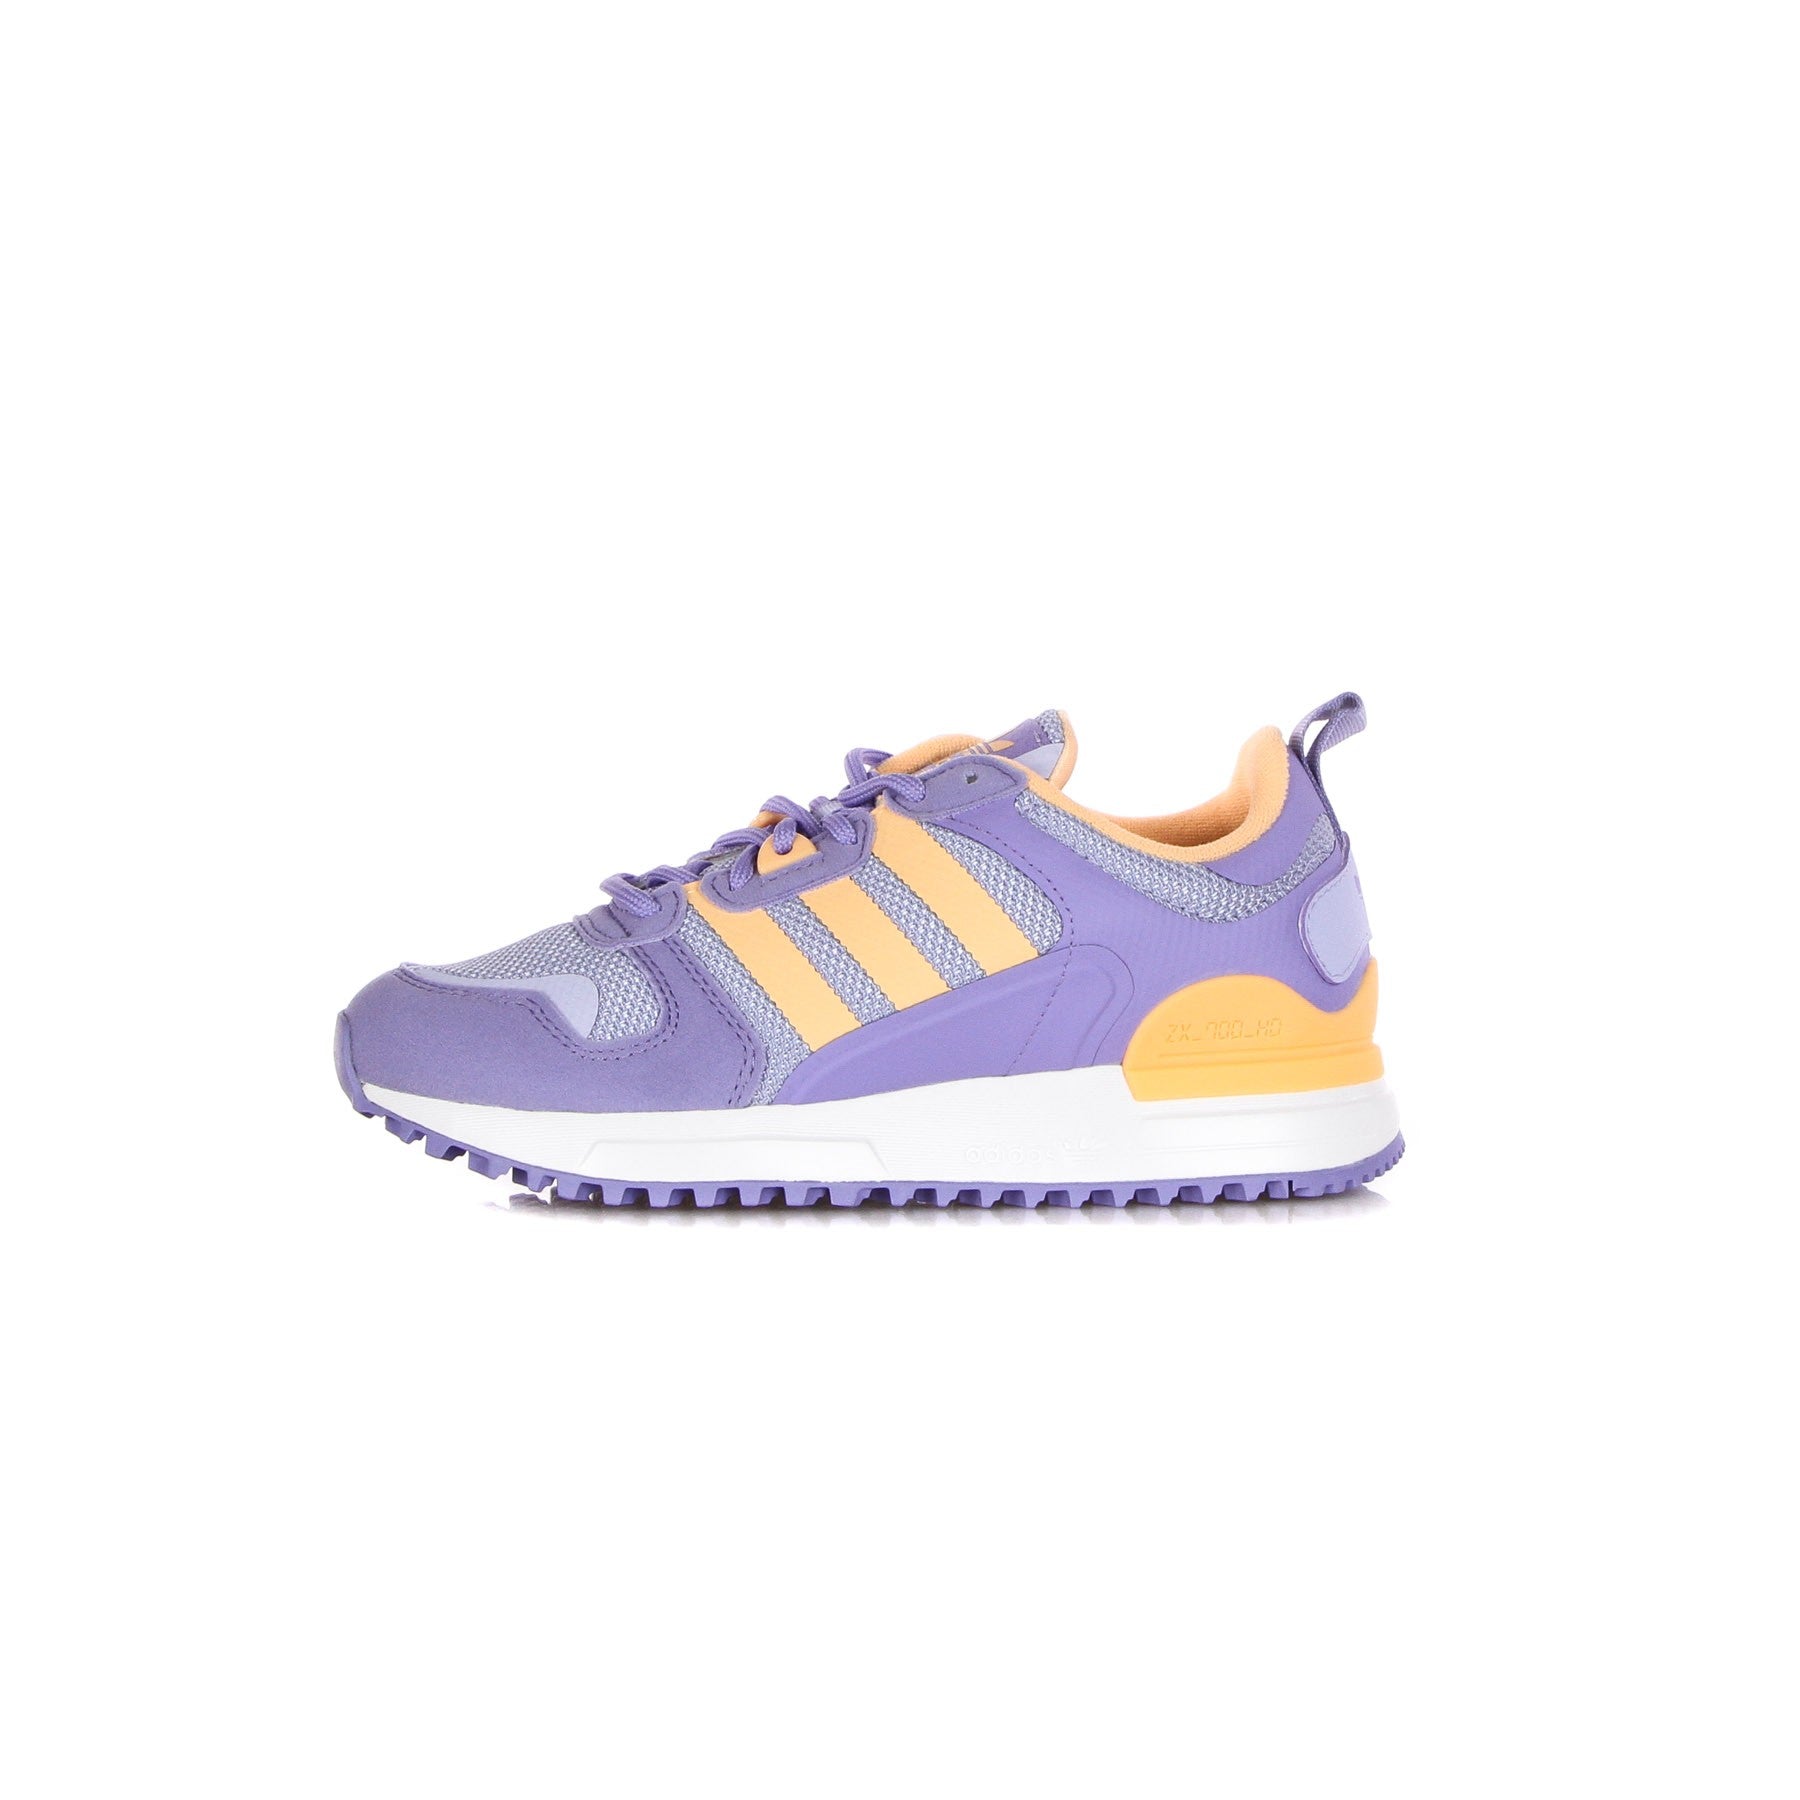 Adidas, Scarpa Bassa Ragazzo Zx 700 Hd J, Light Purple/acid Orange/violet Tone